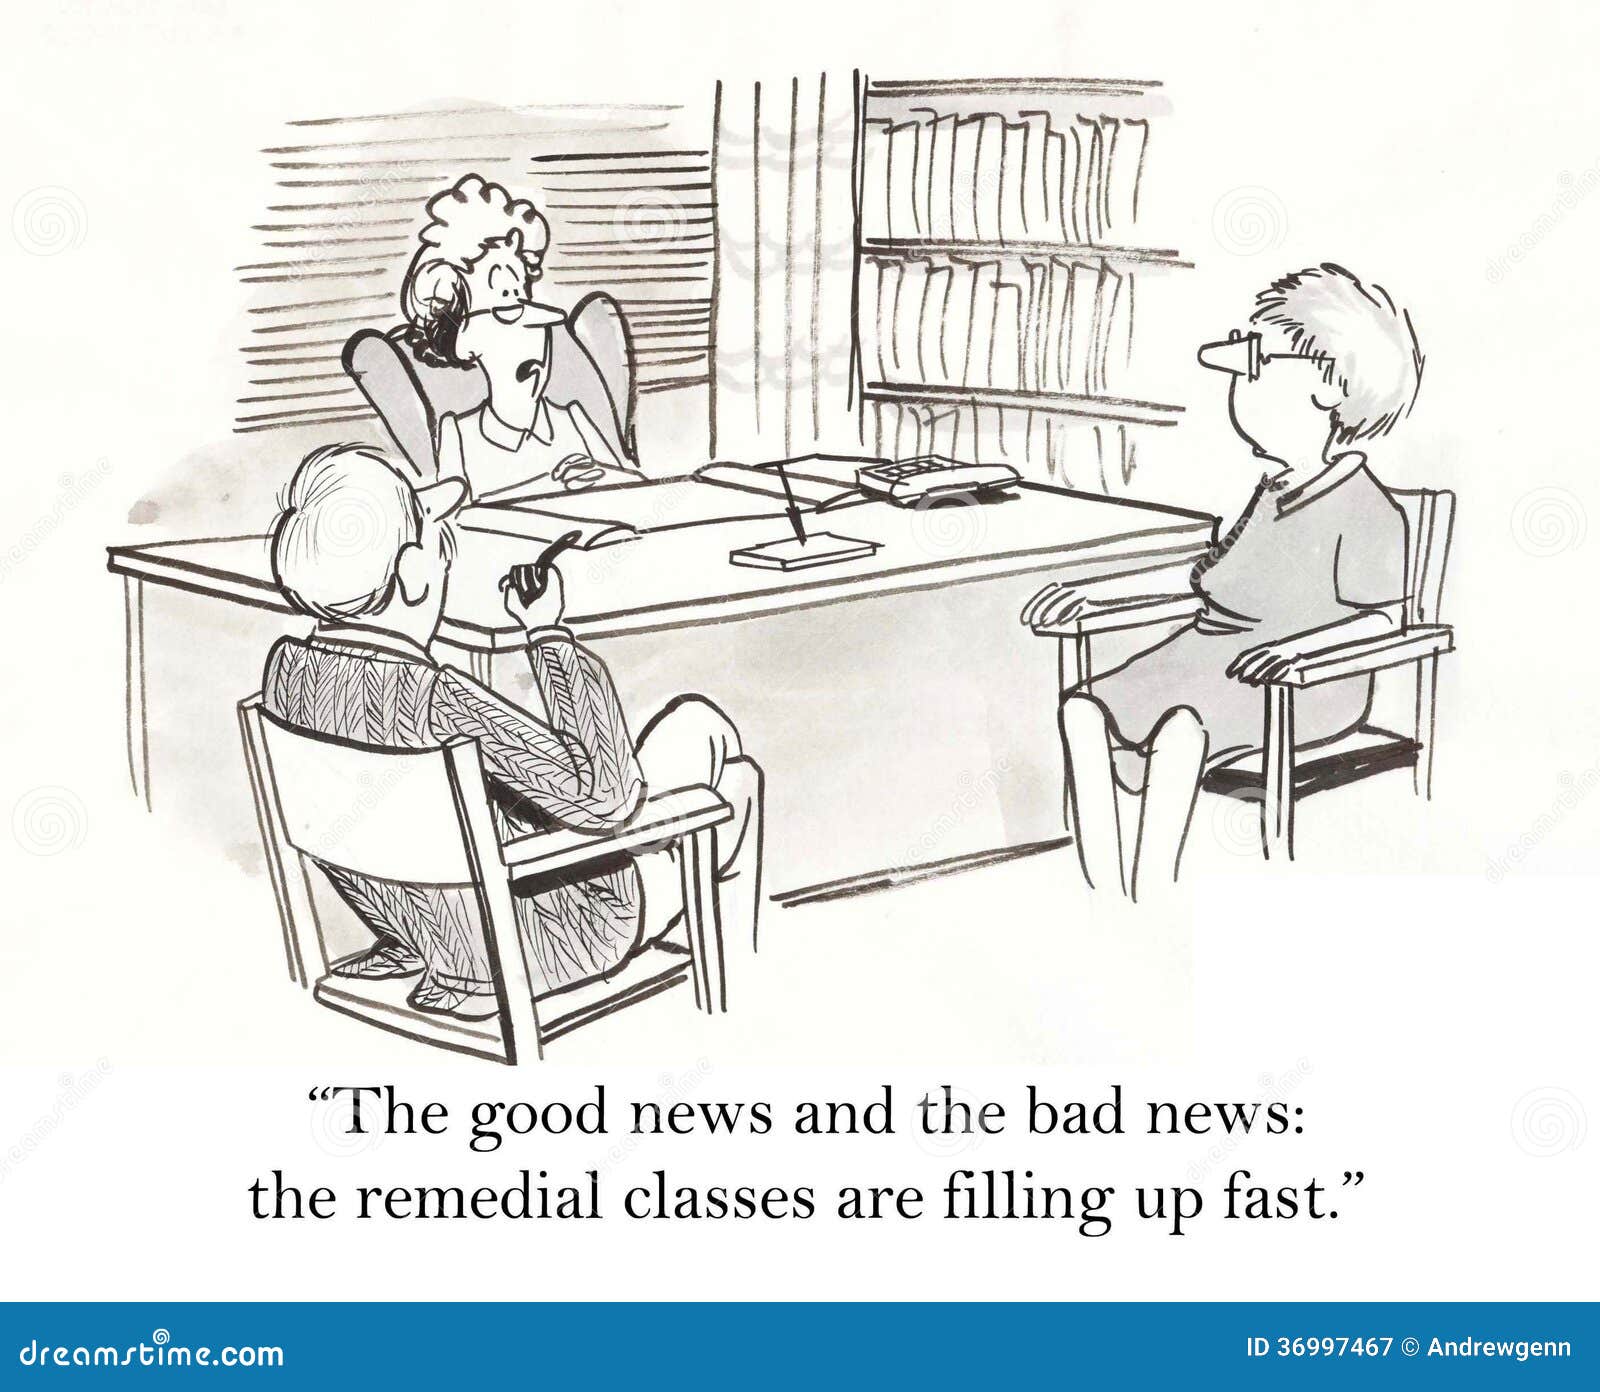 remedial classes